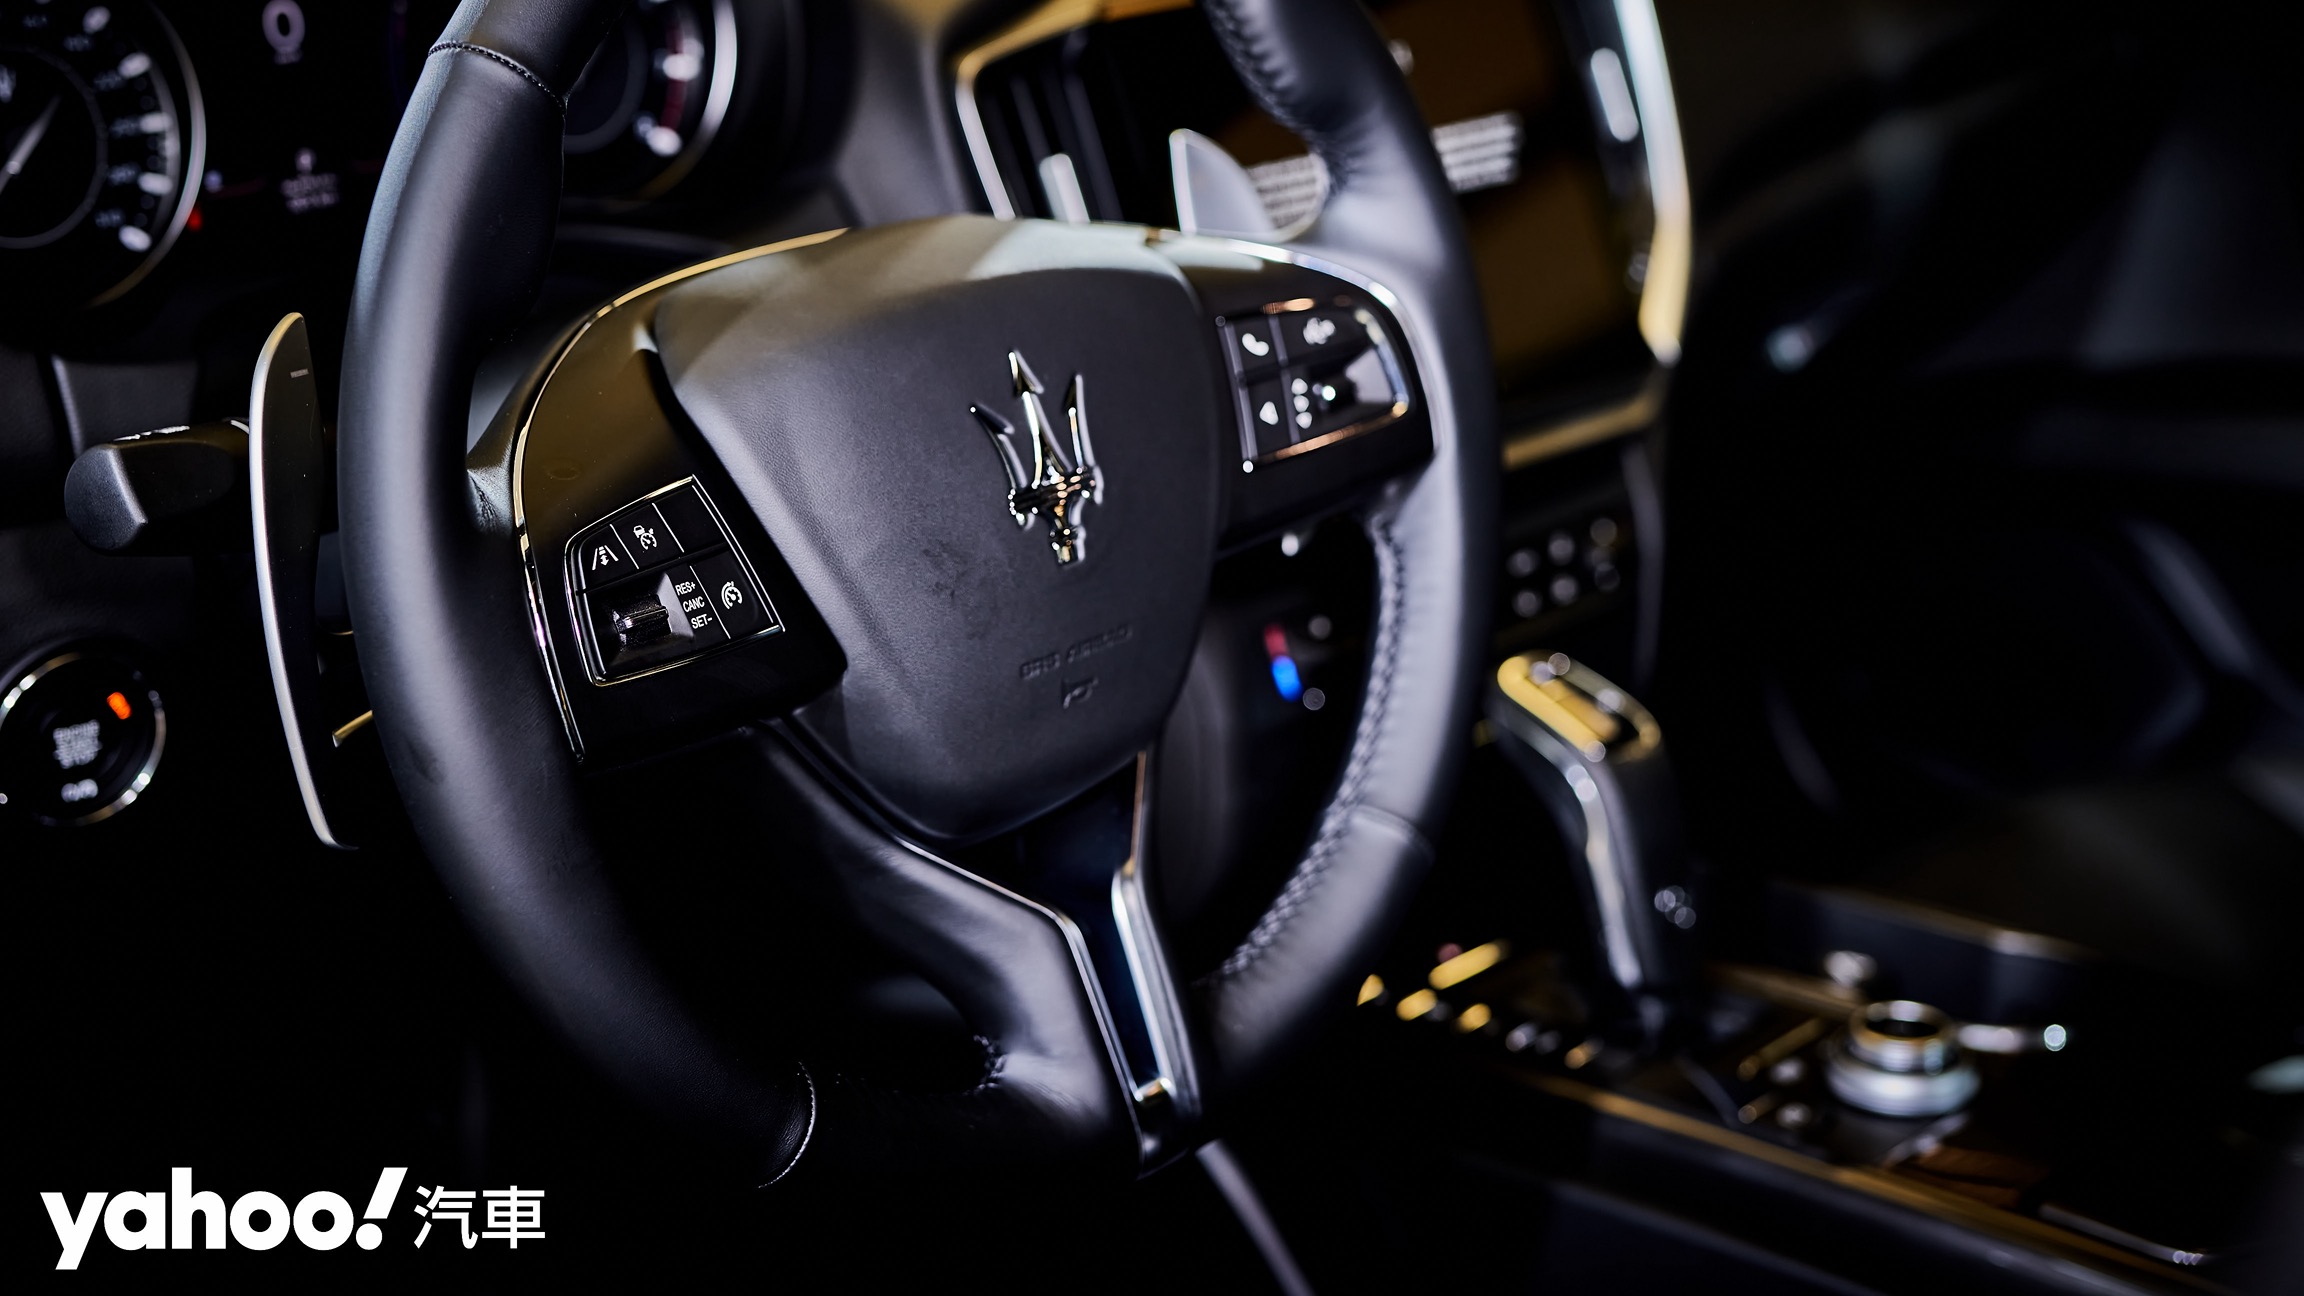 2022 Maserati Ghibli、Quattroporte車系編成更新！逐漸邁向新生樣貌的旅程！